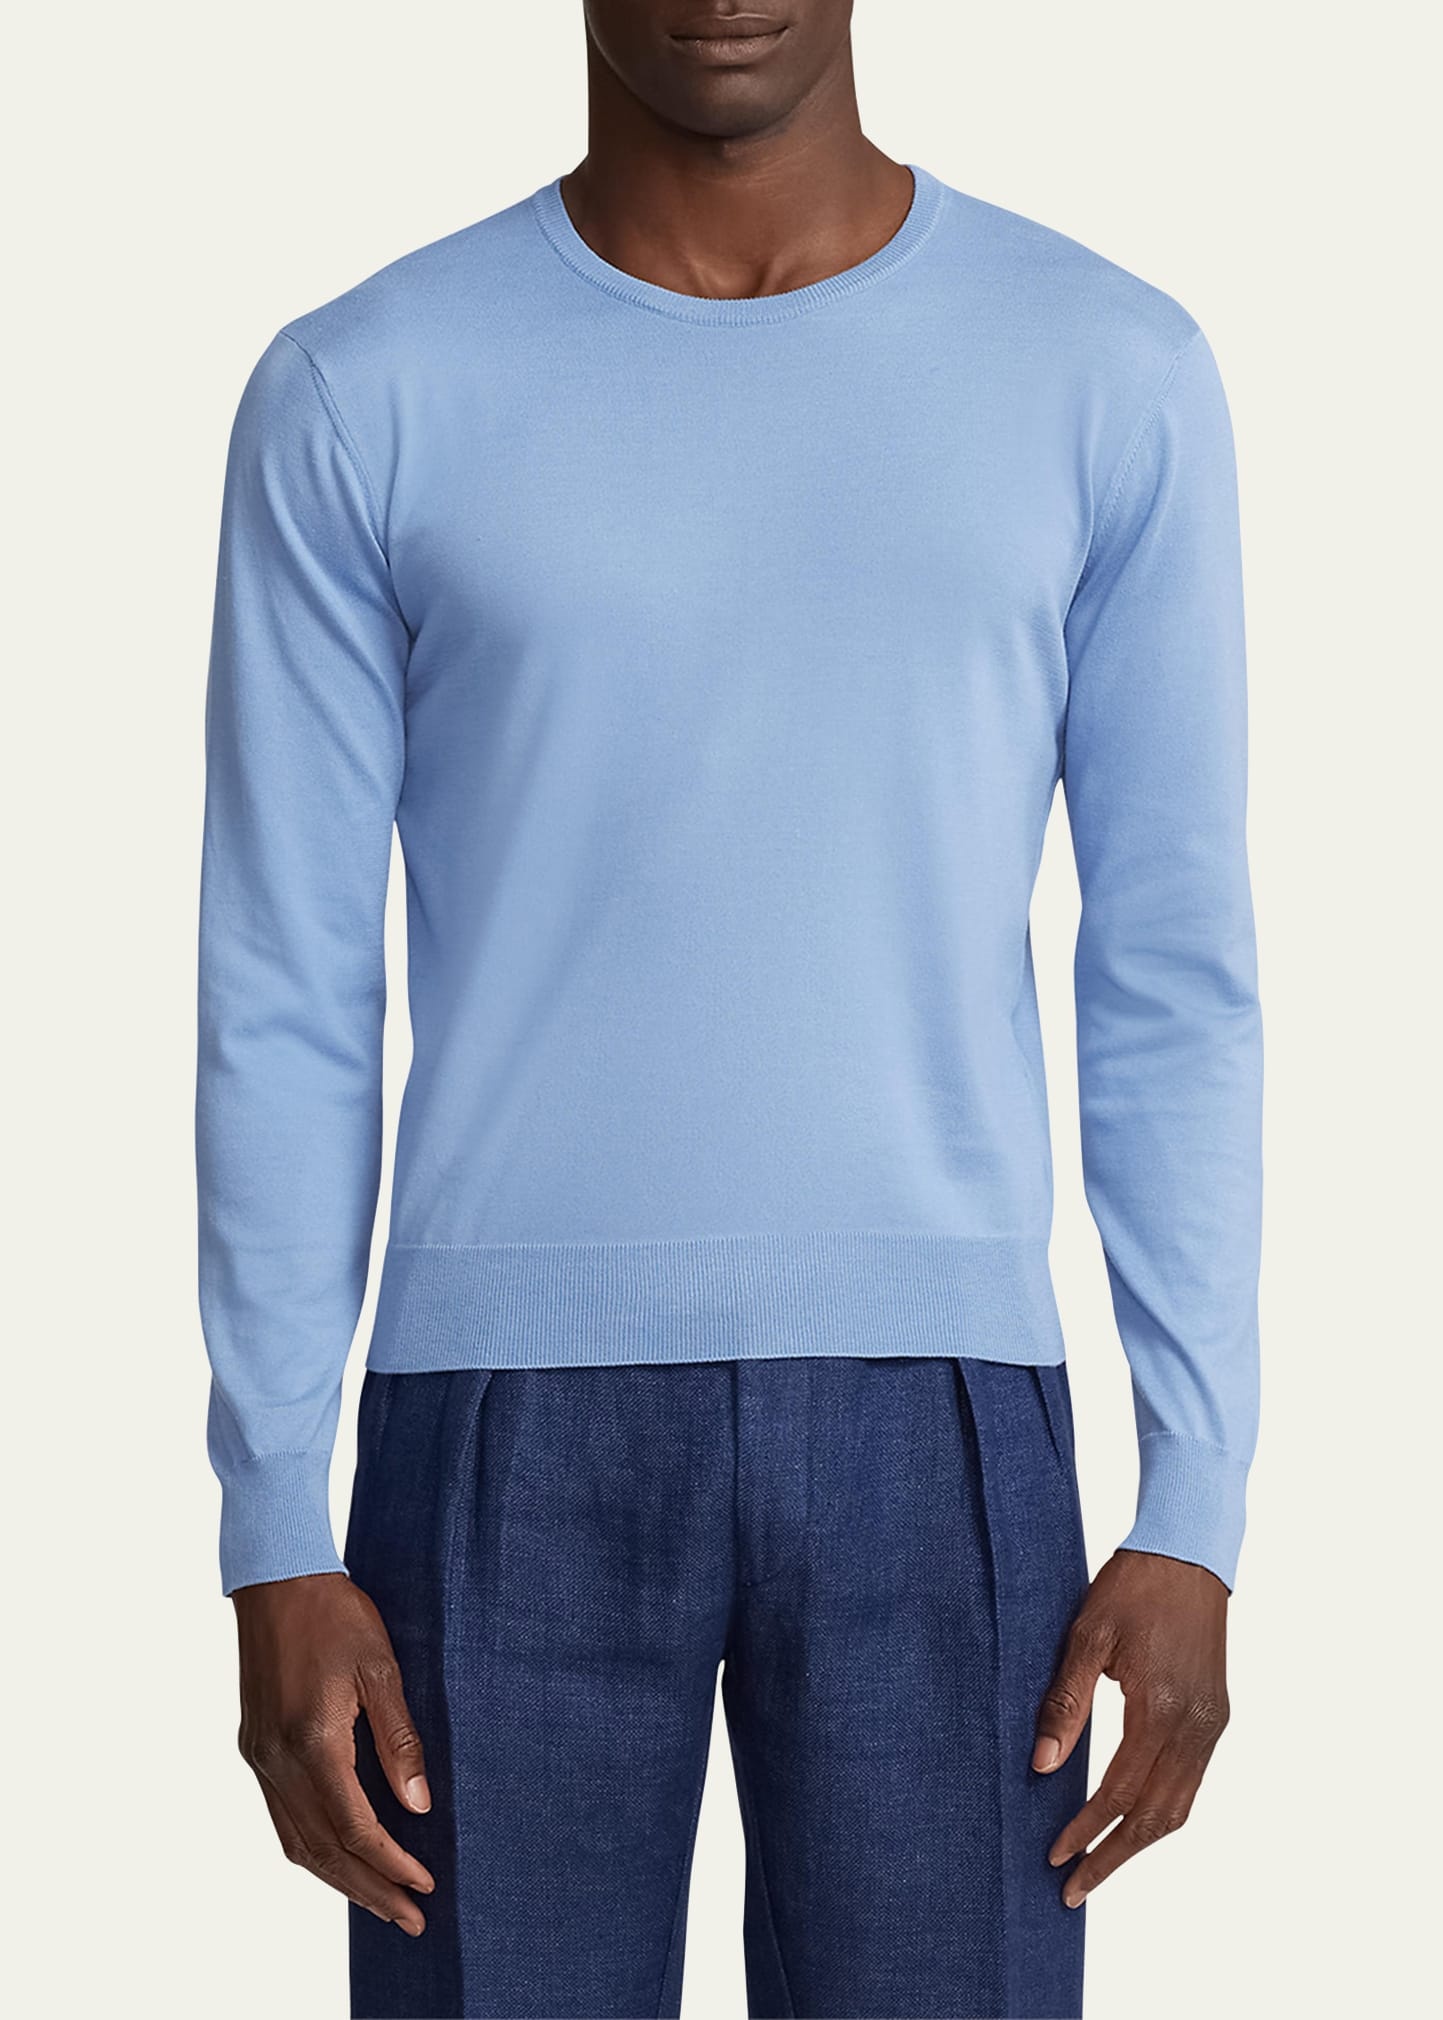 Men's Cotton Crewneck Sweater - 4